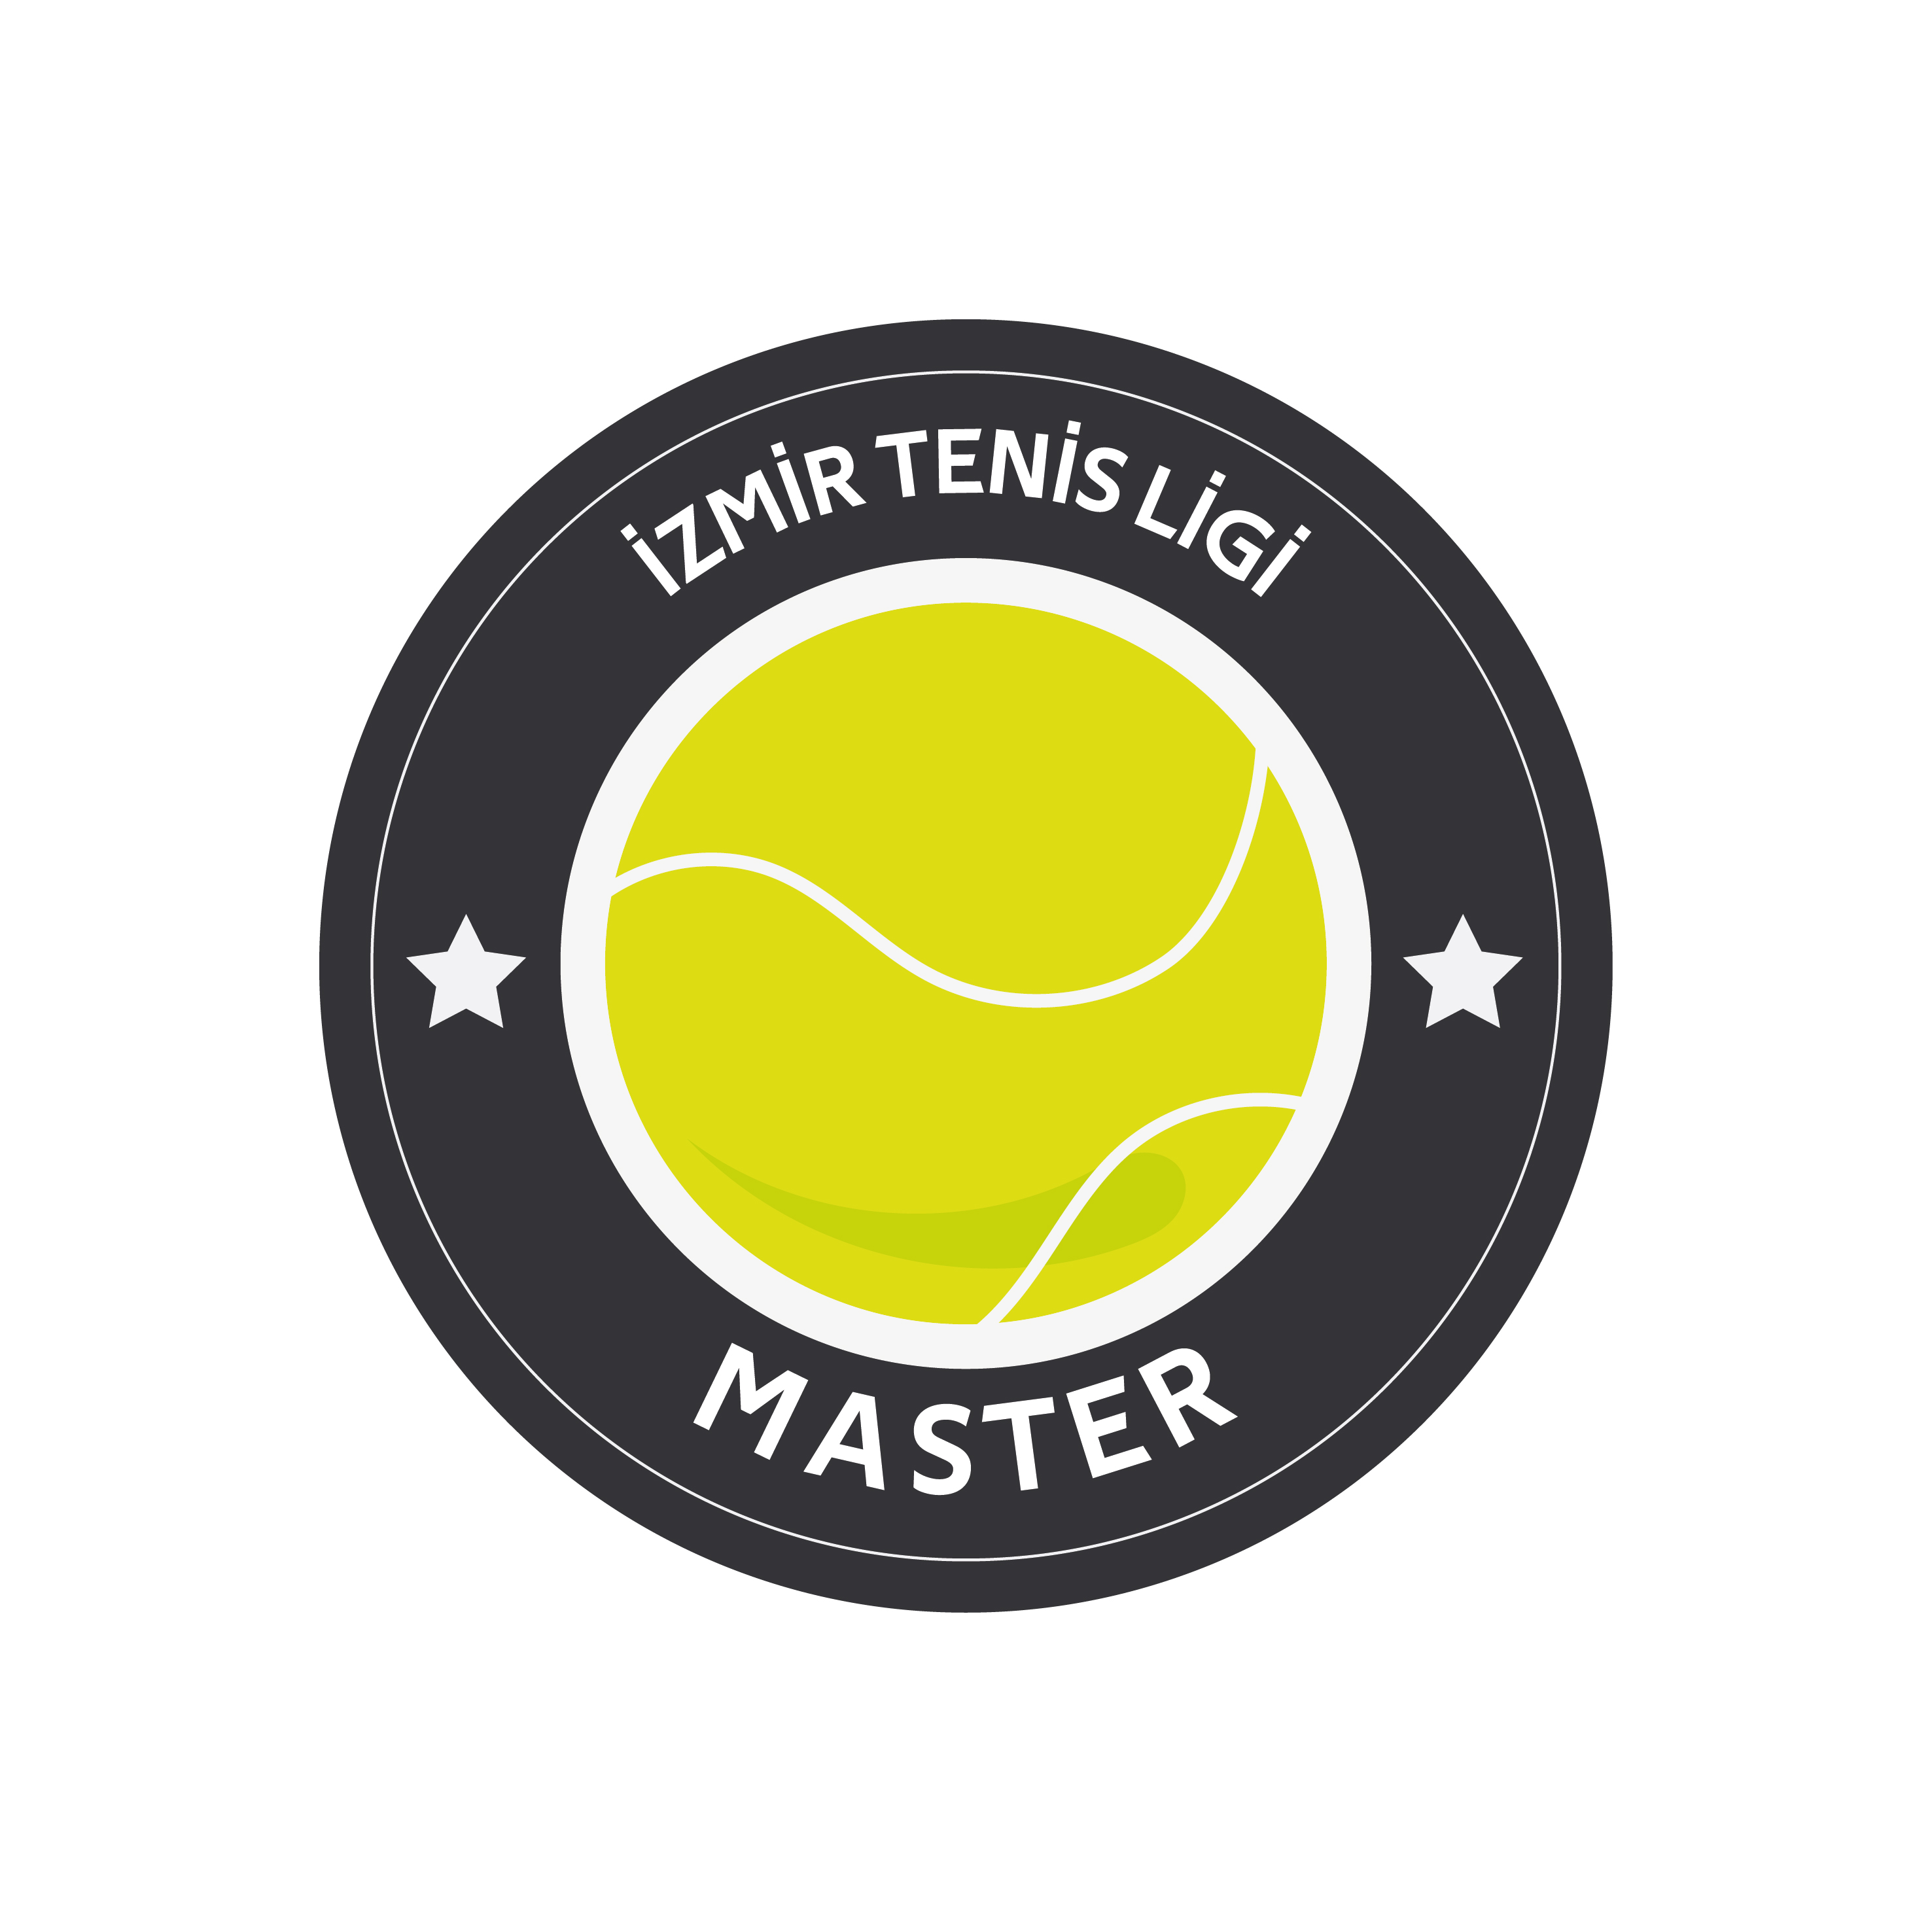 Smyrna Cup Tenis Turnuvası - Master